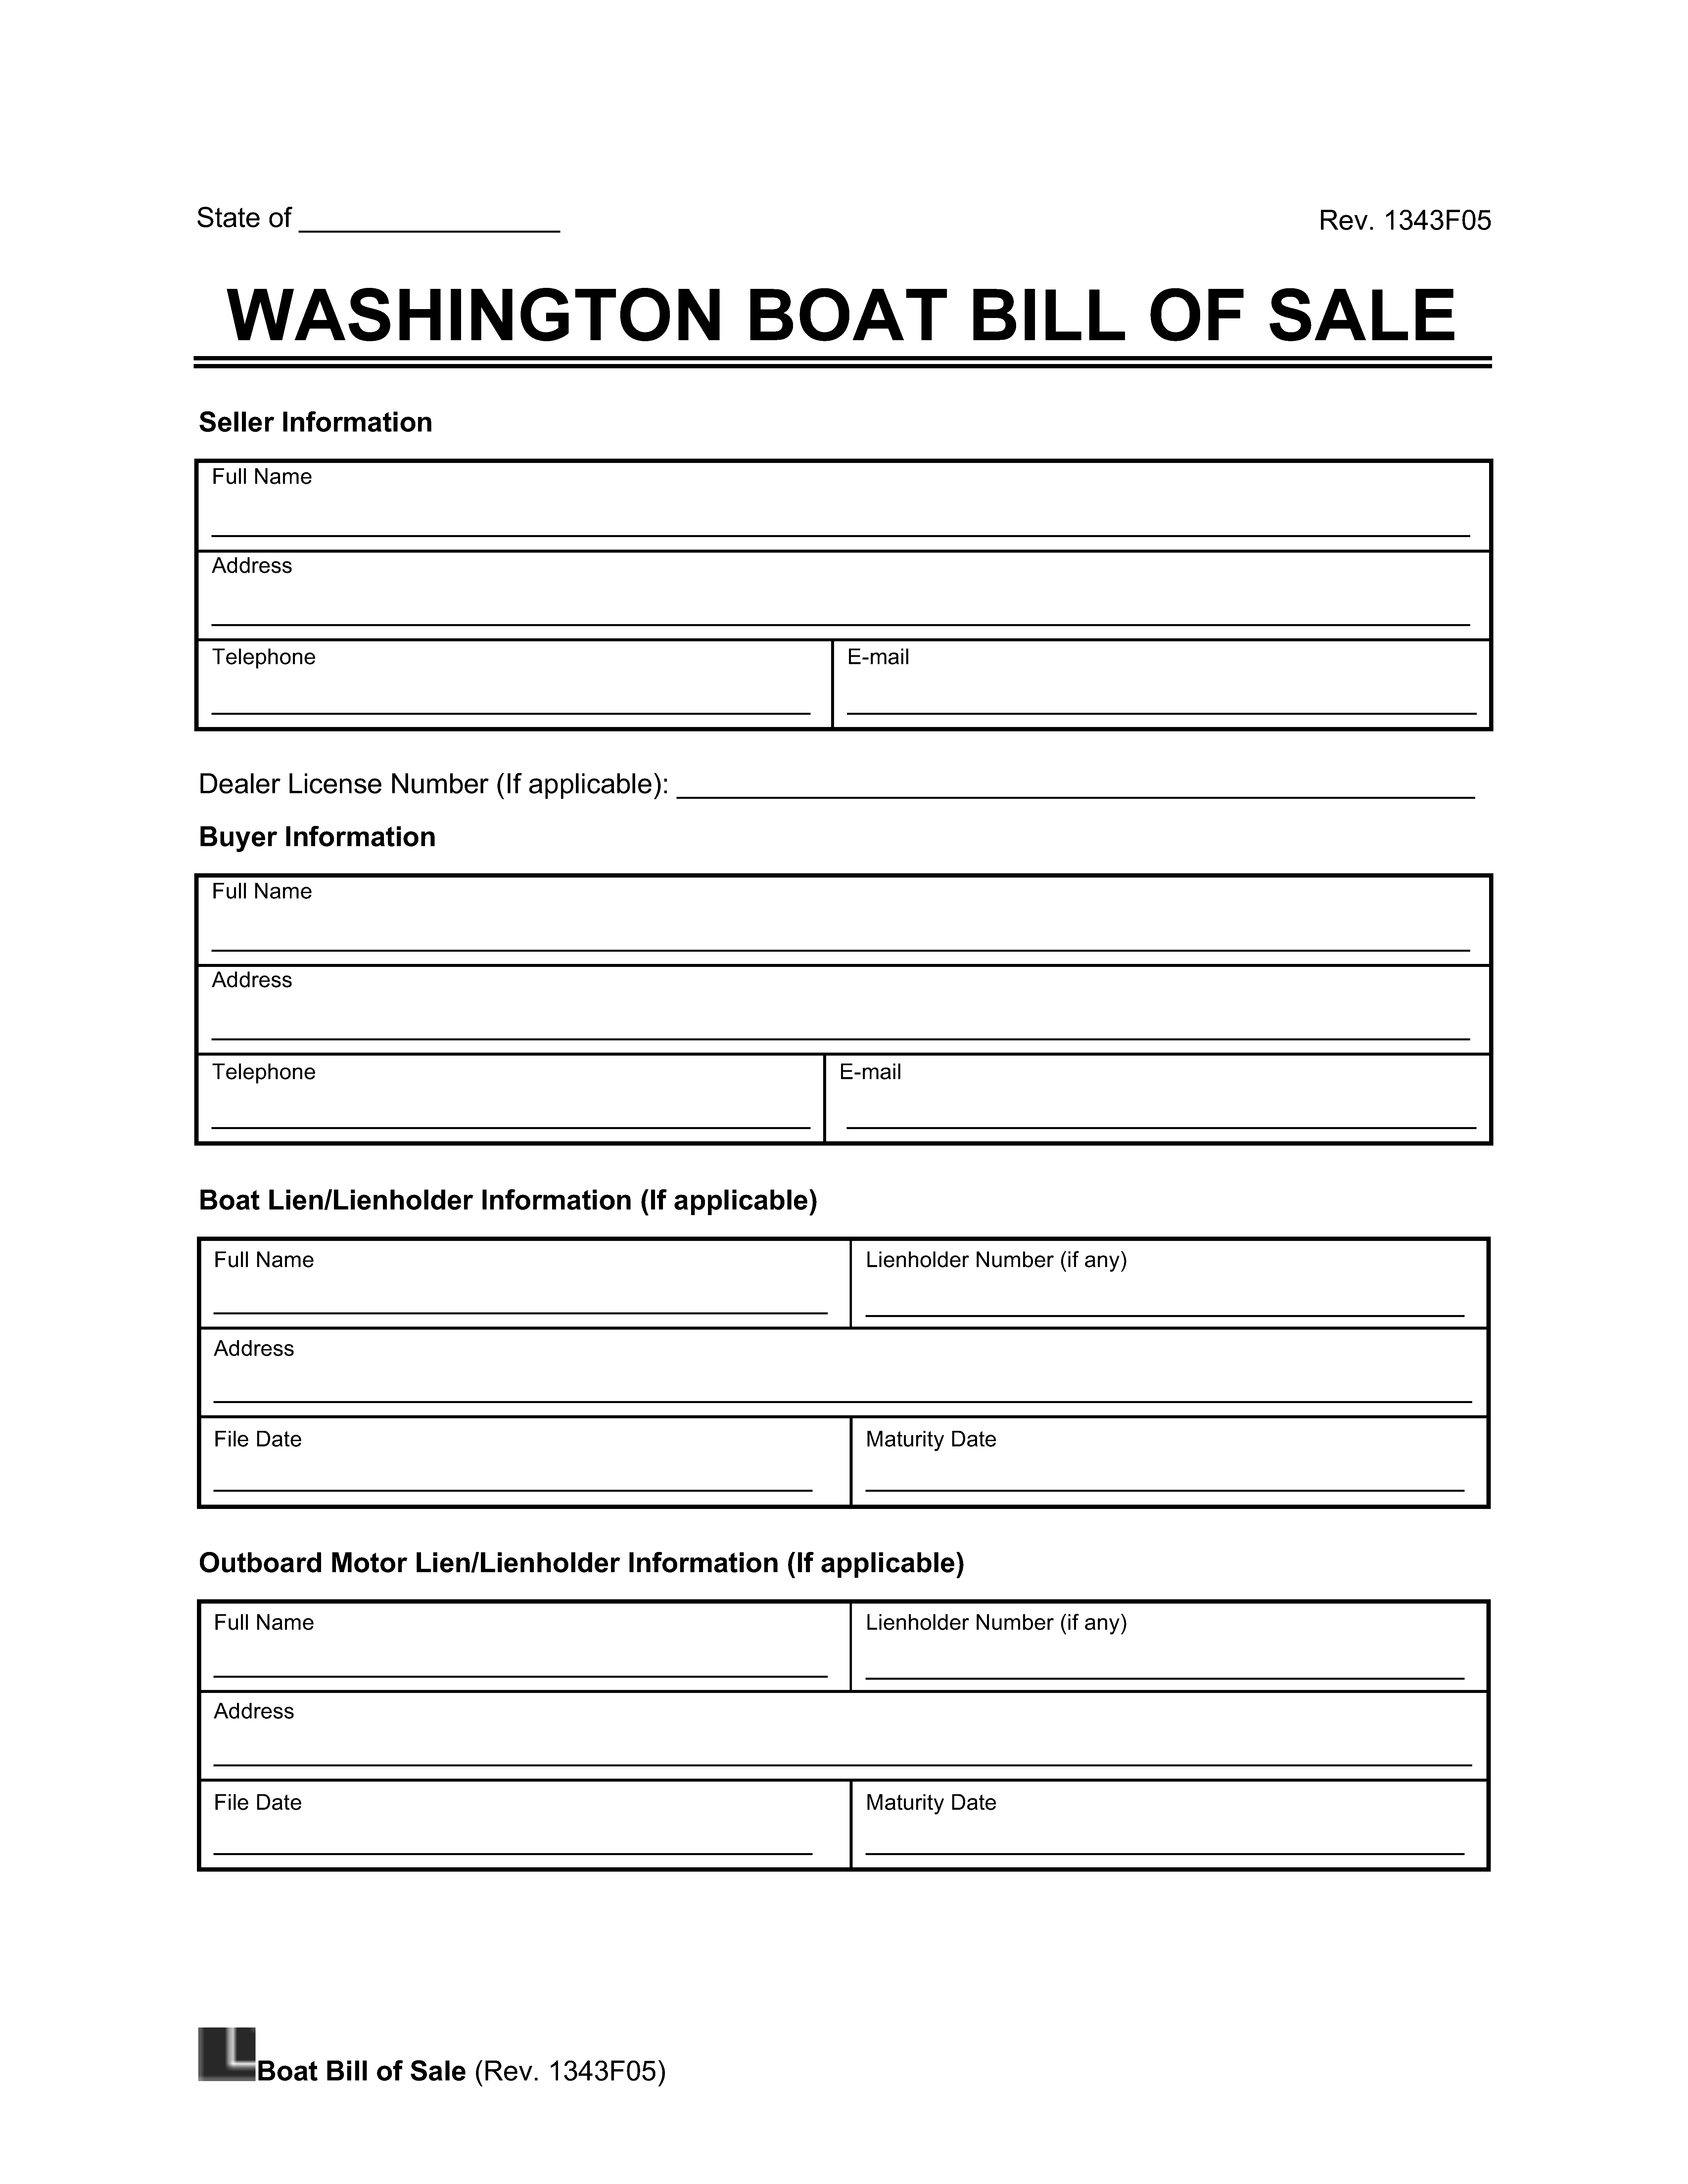 Washington Boat Bill of Sale Template